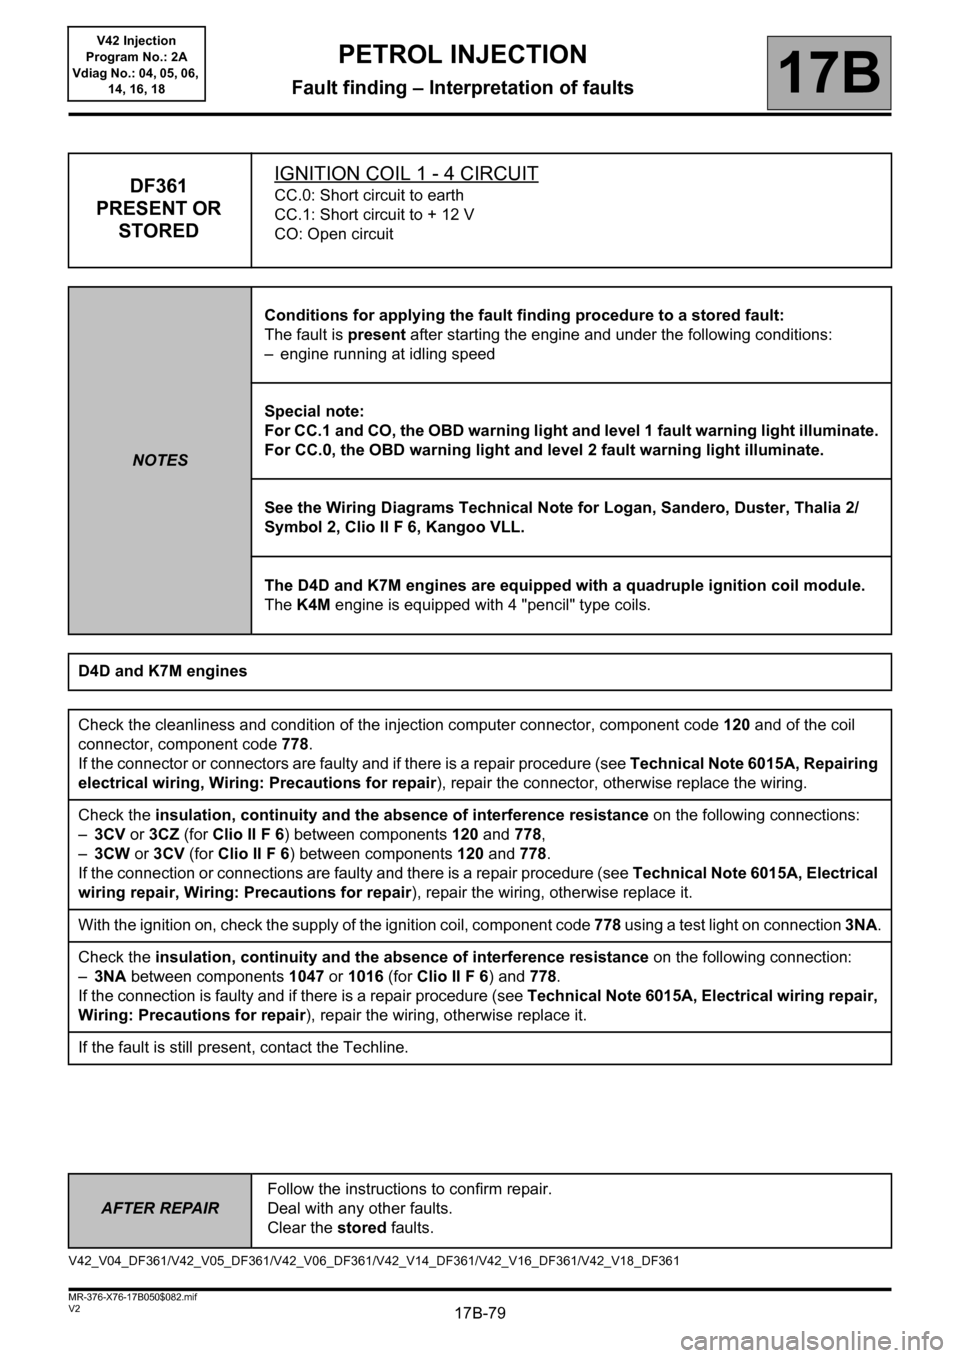 RENAULT KANGOO 2013 X61 / 2.G Petrol V42 Injection Service Manual 17B-79V2 MR-376-X76-17B050$082.mif
PETROL INJECTION
Fault finding – Interpretation of faults17B
V42 Injection
Program No.: 2A
Vdiag No.: 04, 05, 06, 
14, 16, 18
AFTER REPAIRFollow the instructions t